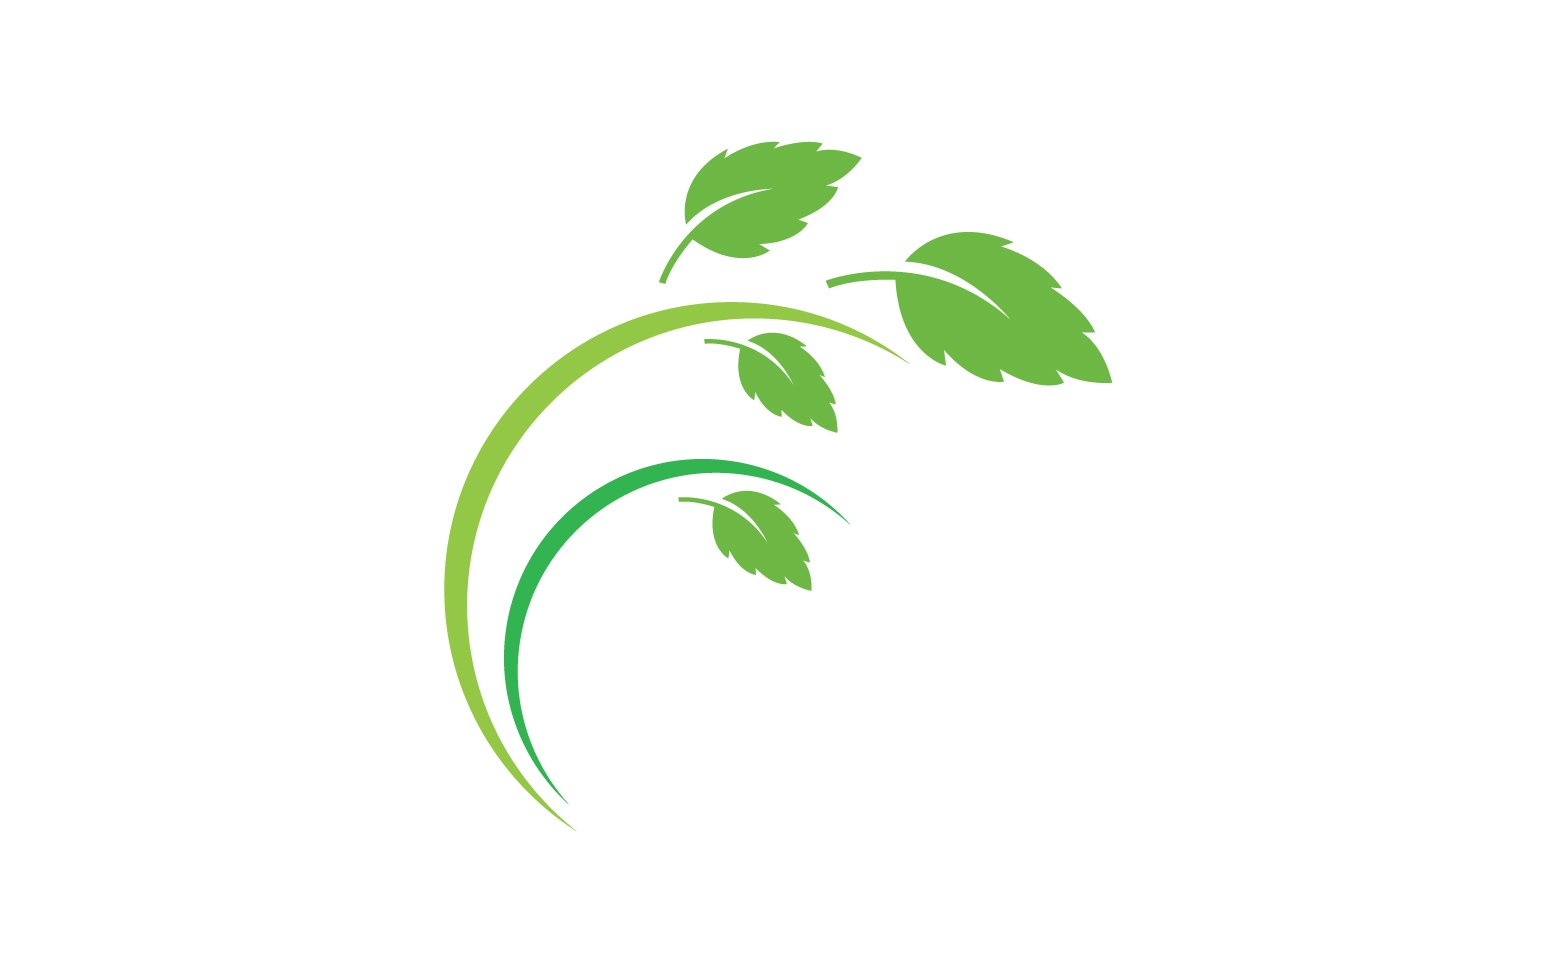 Leaf green ecology tree element icon version v17